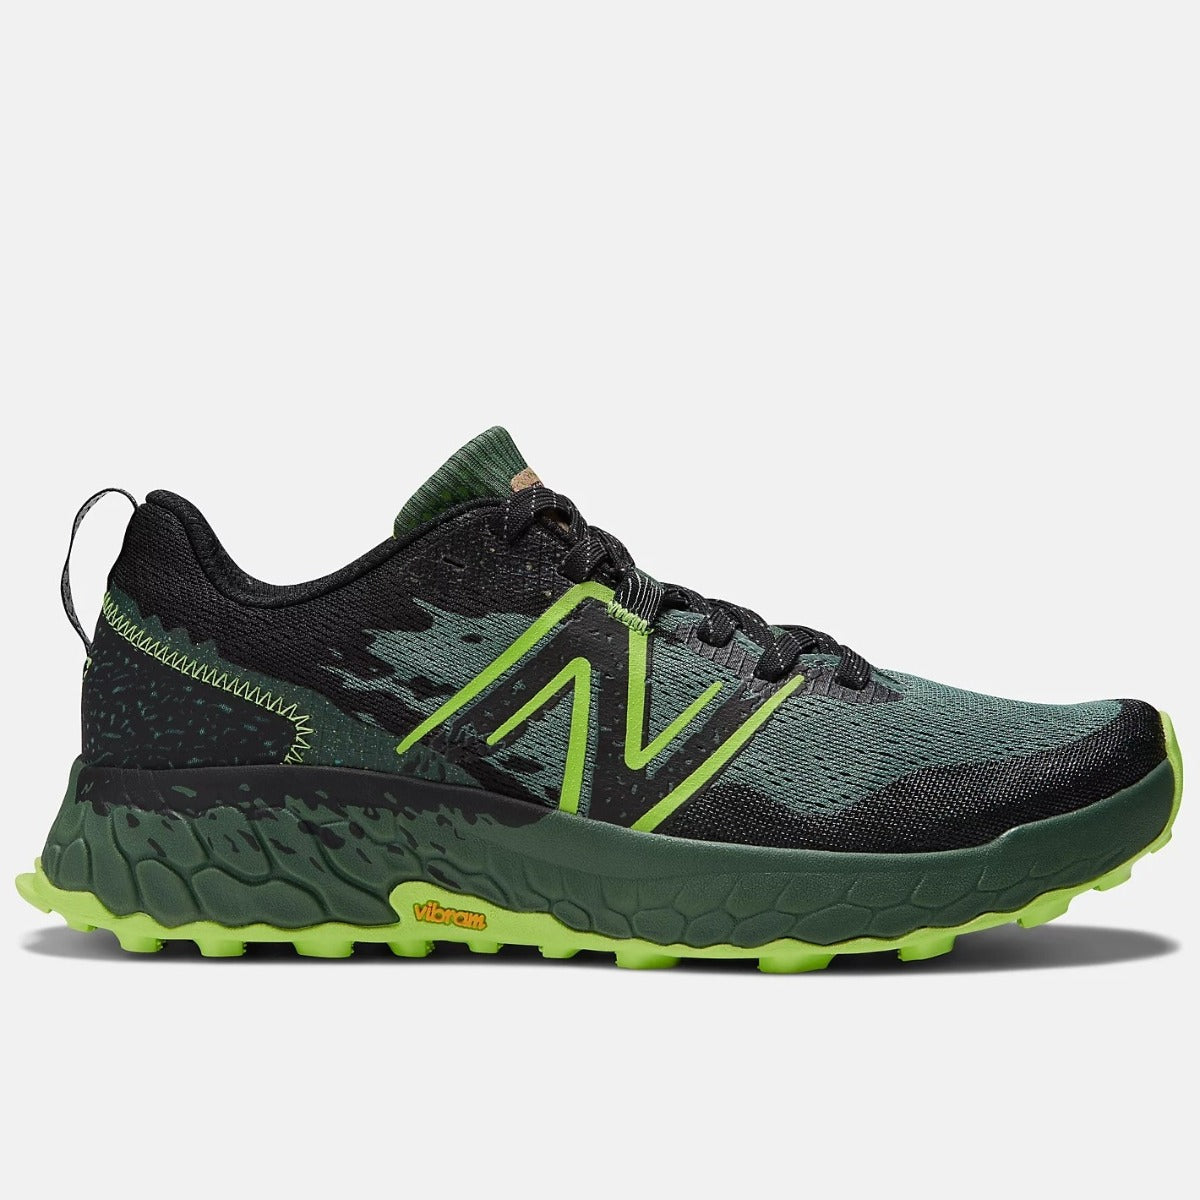 New Balance Hierro V7 Trail Shoes Men's (Jade Pixel Green)